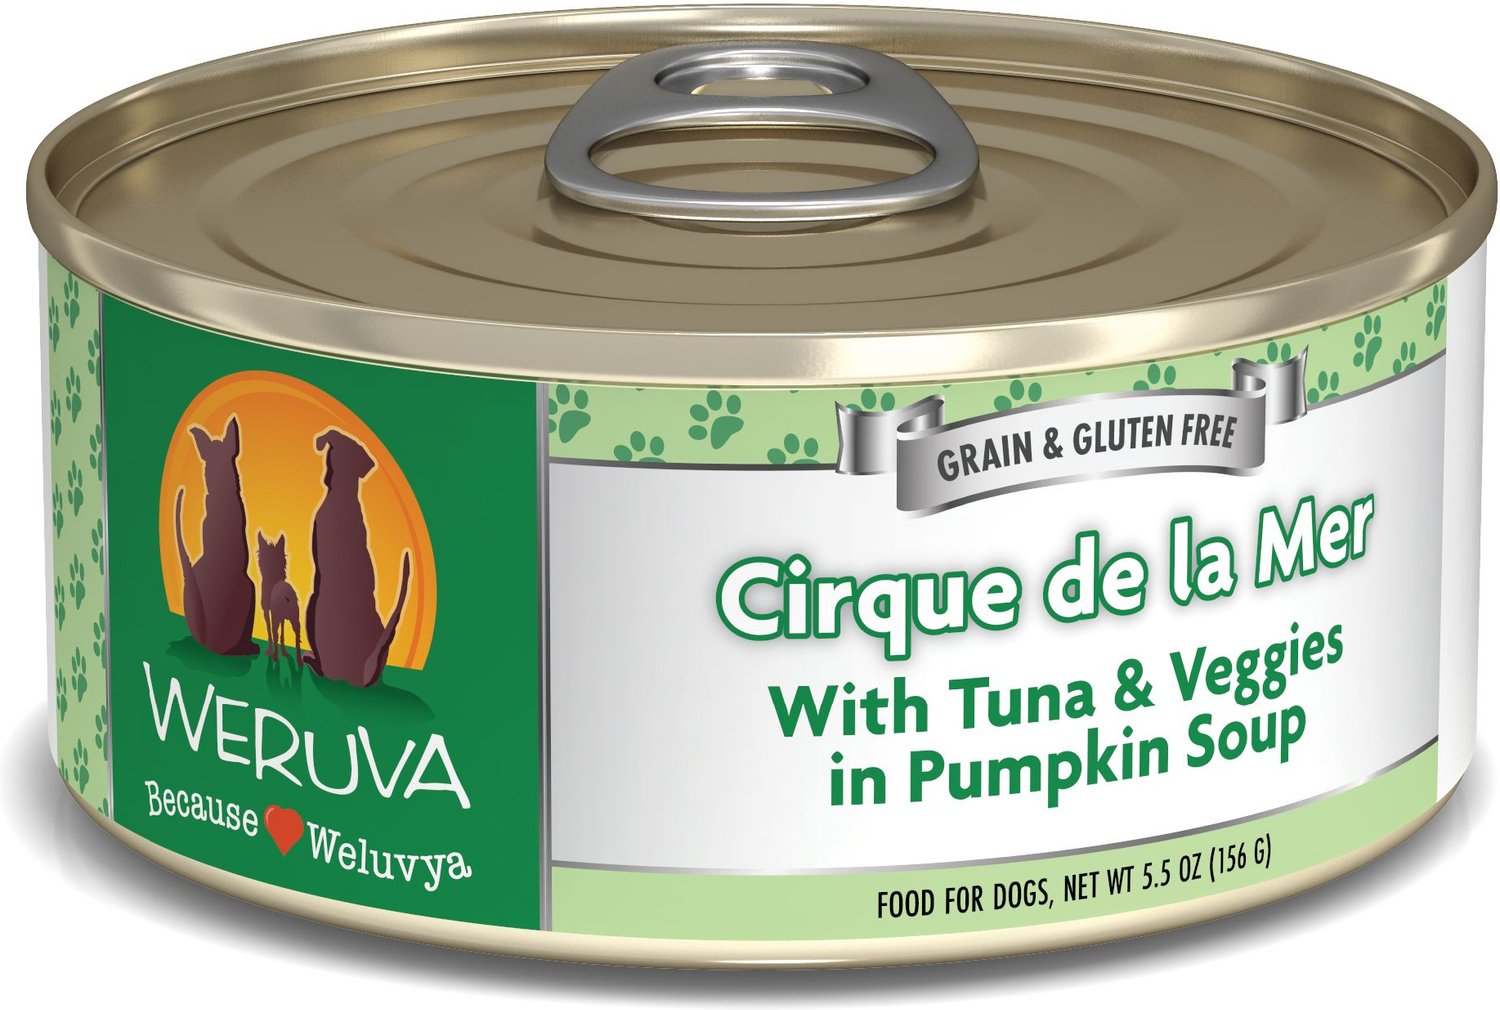 Weruva Cirque De La Mer With Tuna Veggies In Pumpkin Soup Grain Free Canned Dog Food 5 5 Oz Case Of 24 Chewy Com